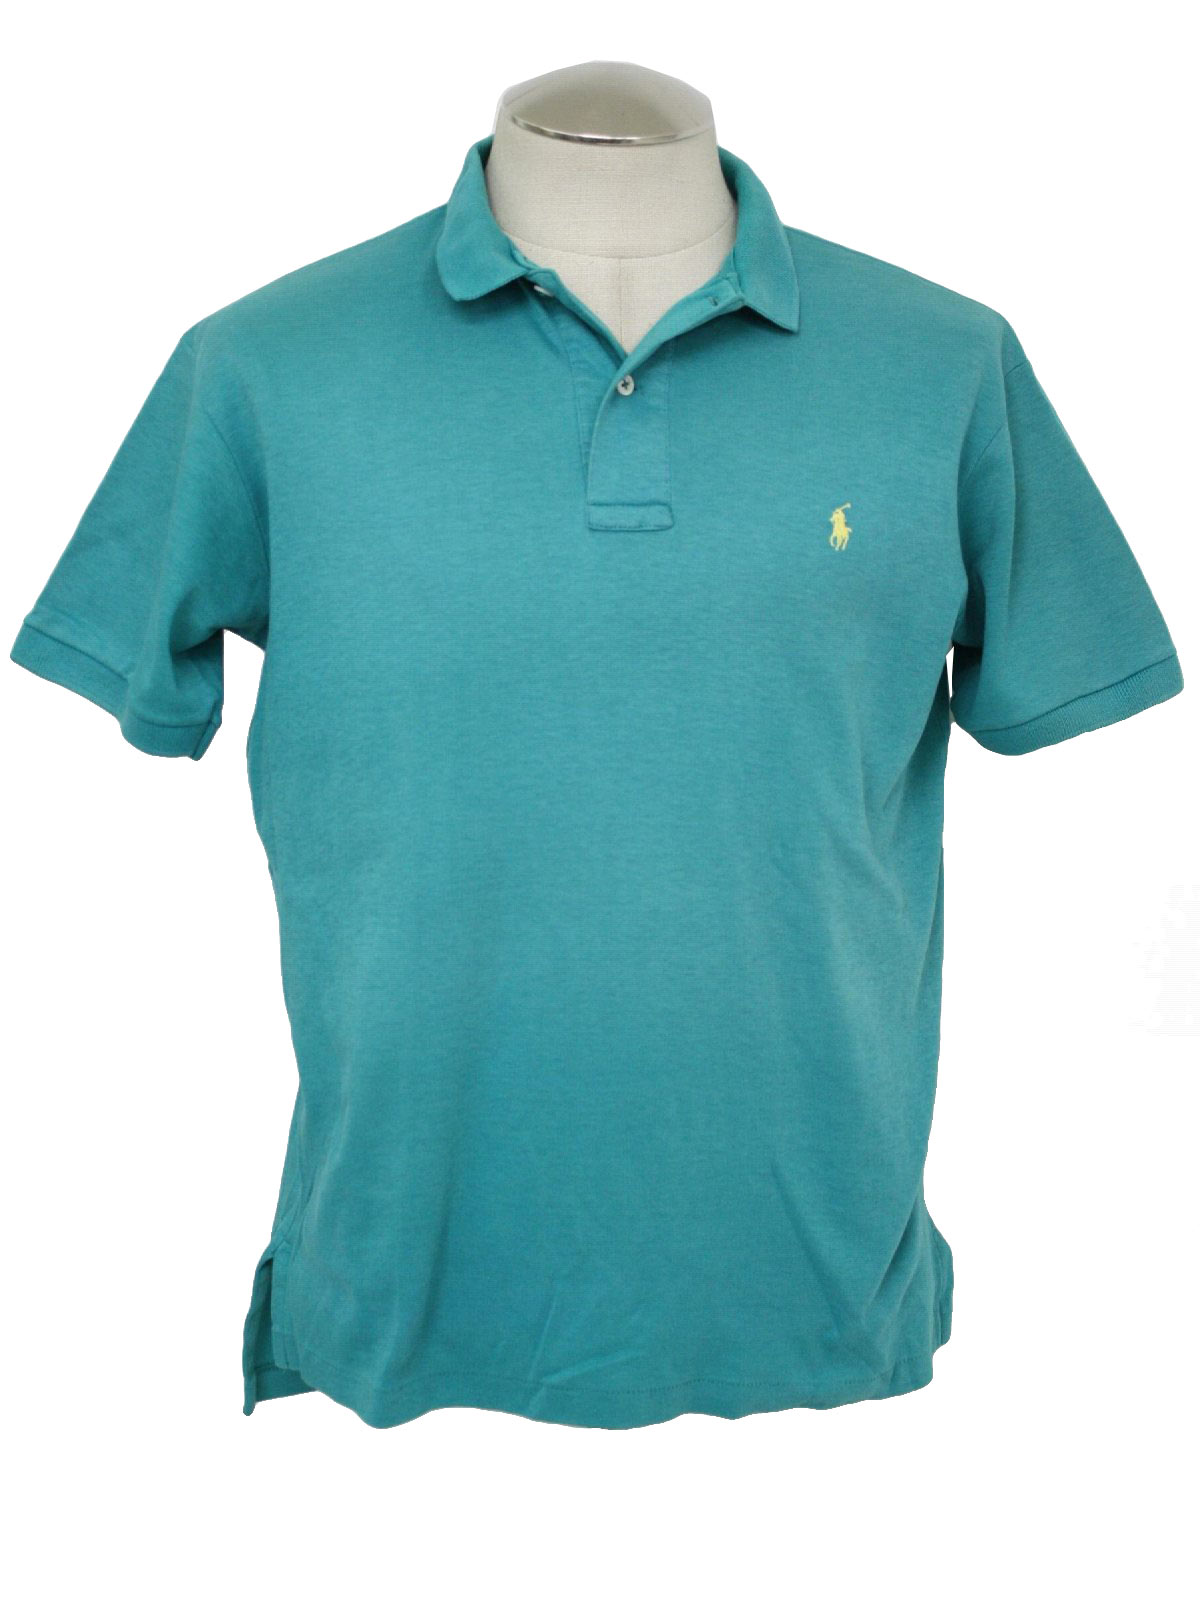 Retro 80's Shirt: 80s -Polo by Ralph Lauren- Mens teal green short ...